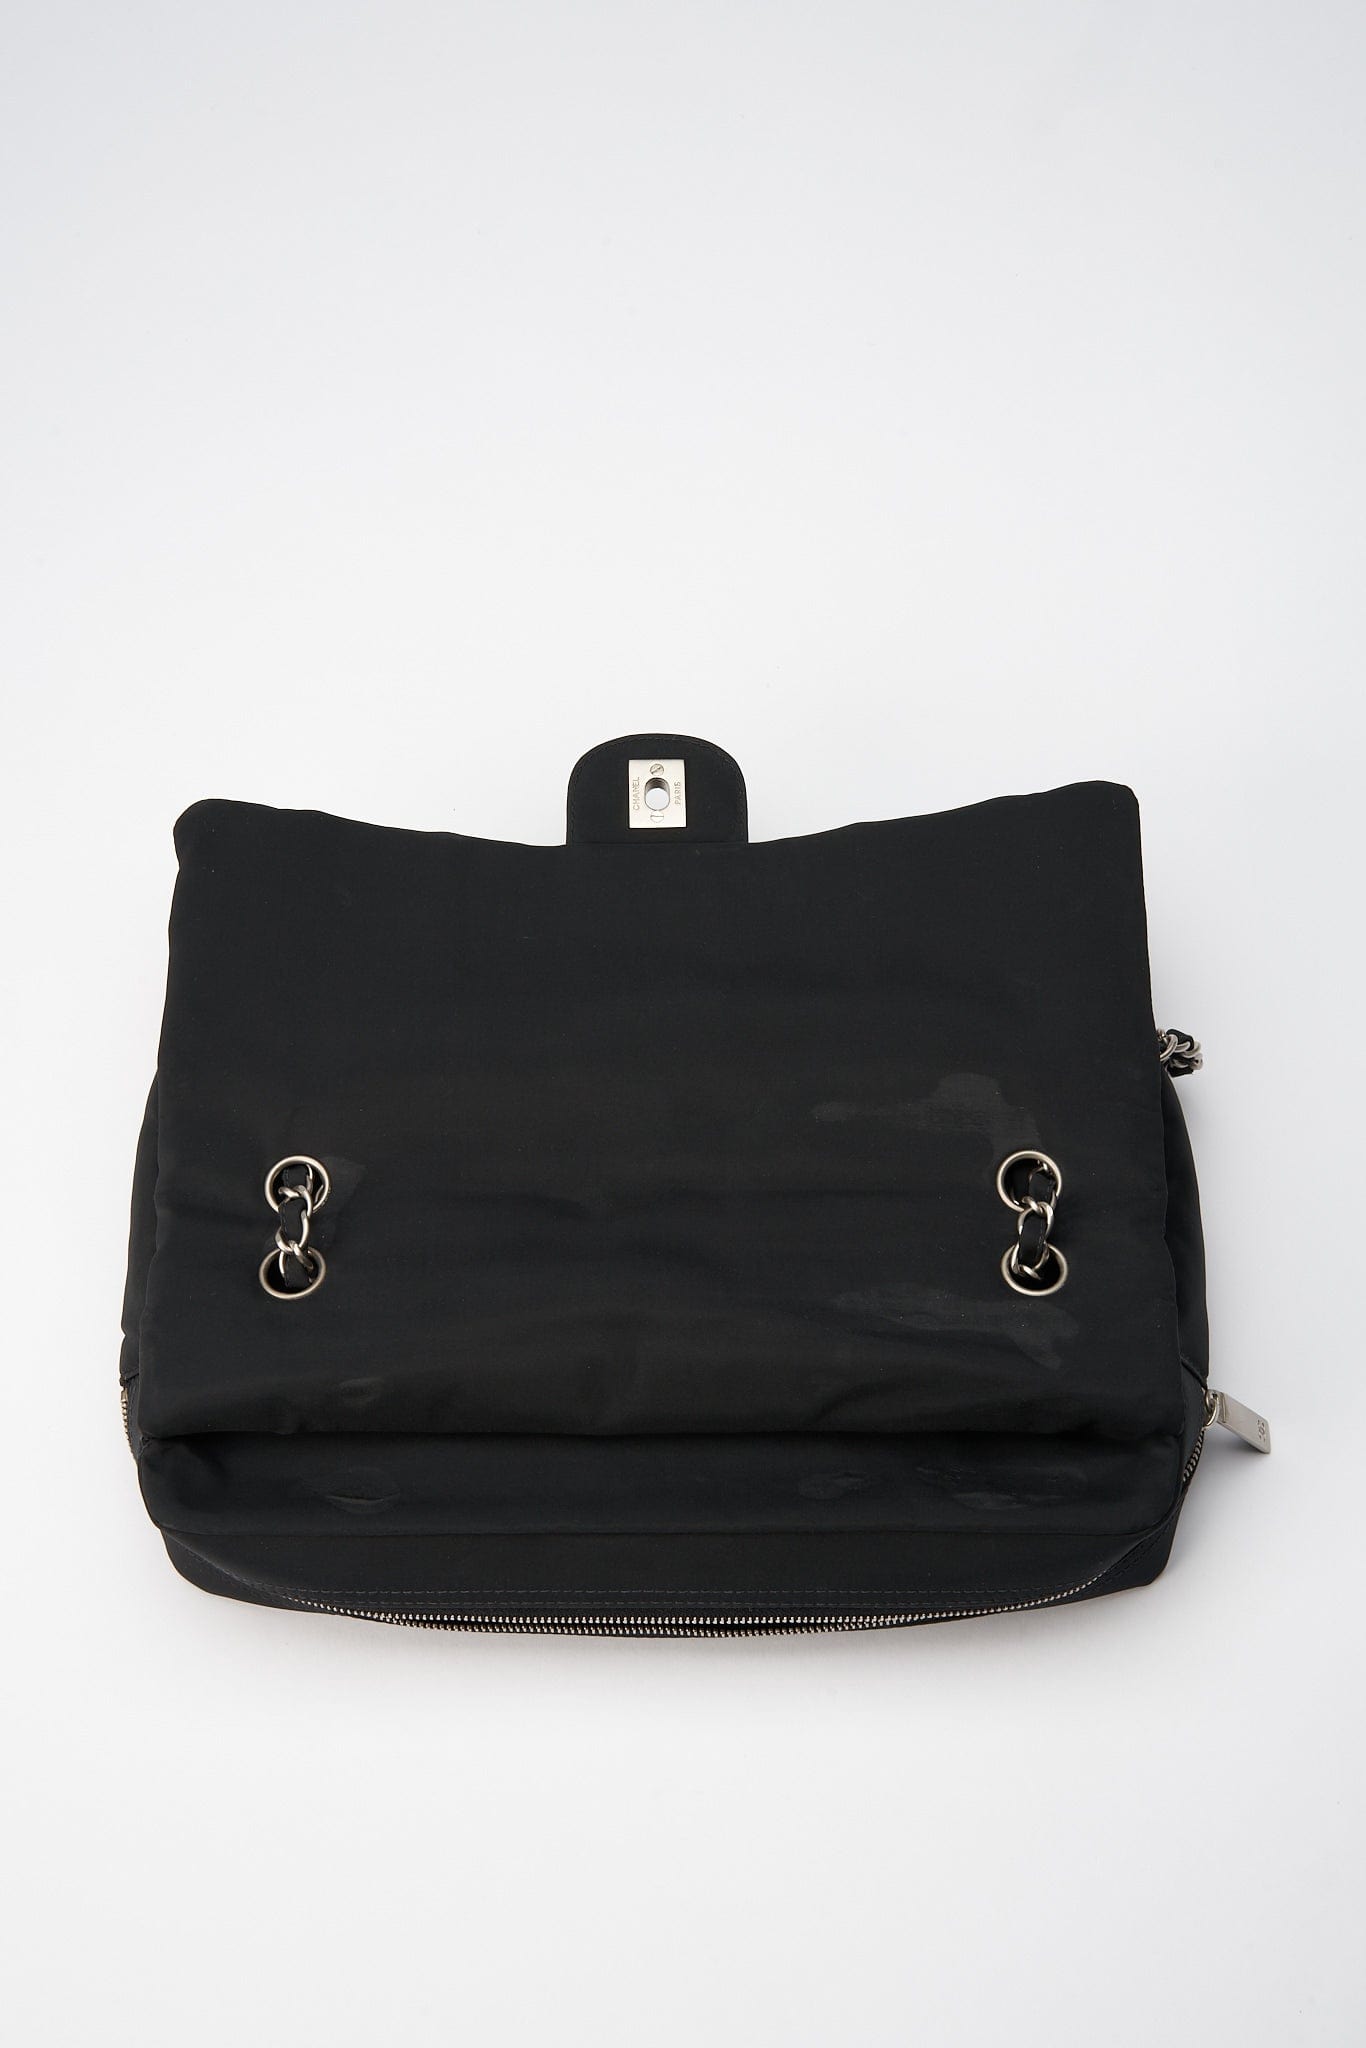 Chanel Black Nylon Chocolate Bar Flap Bag 1815